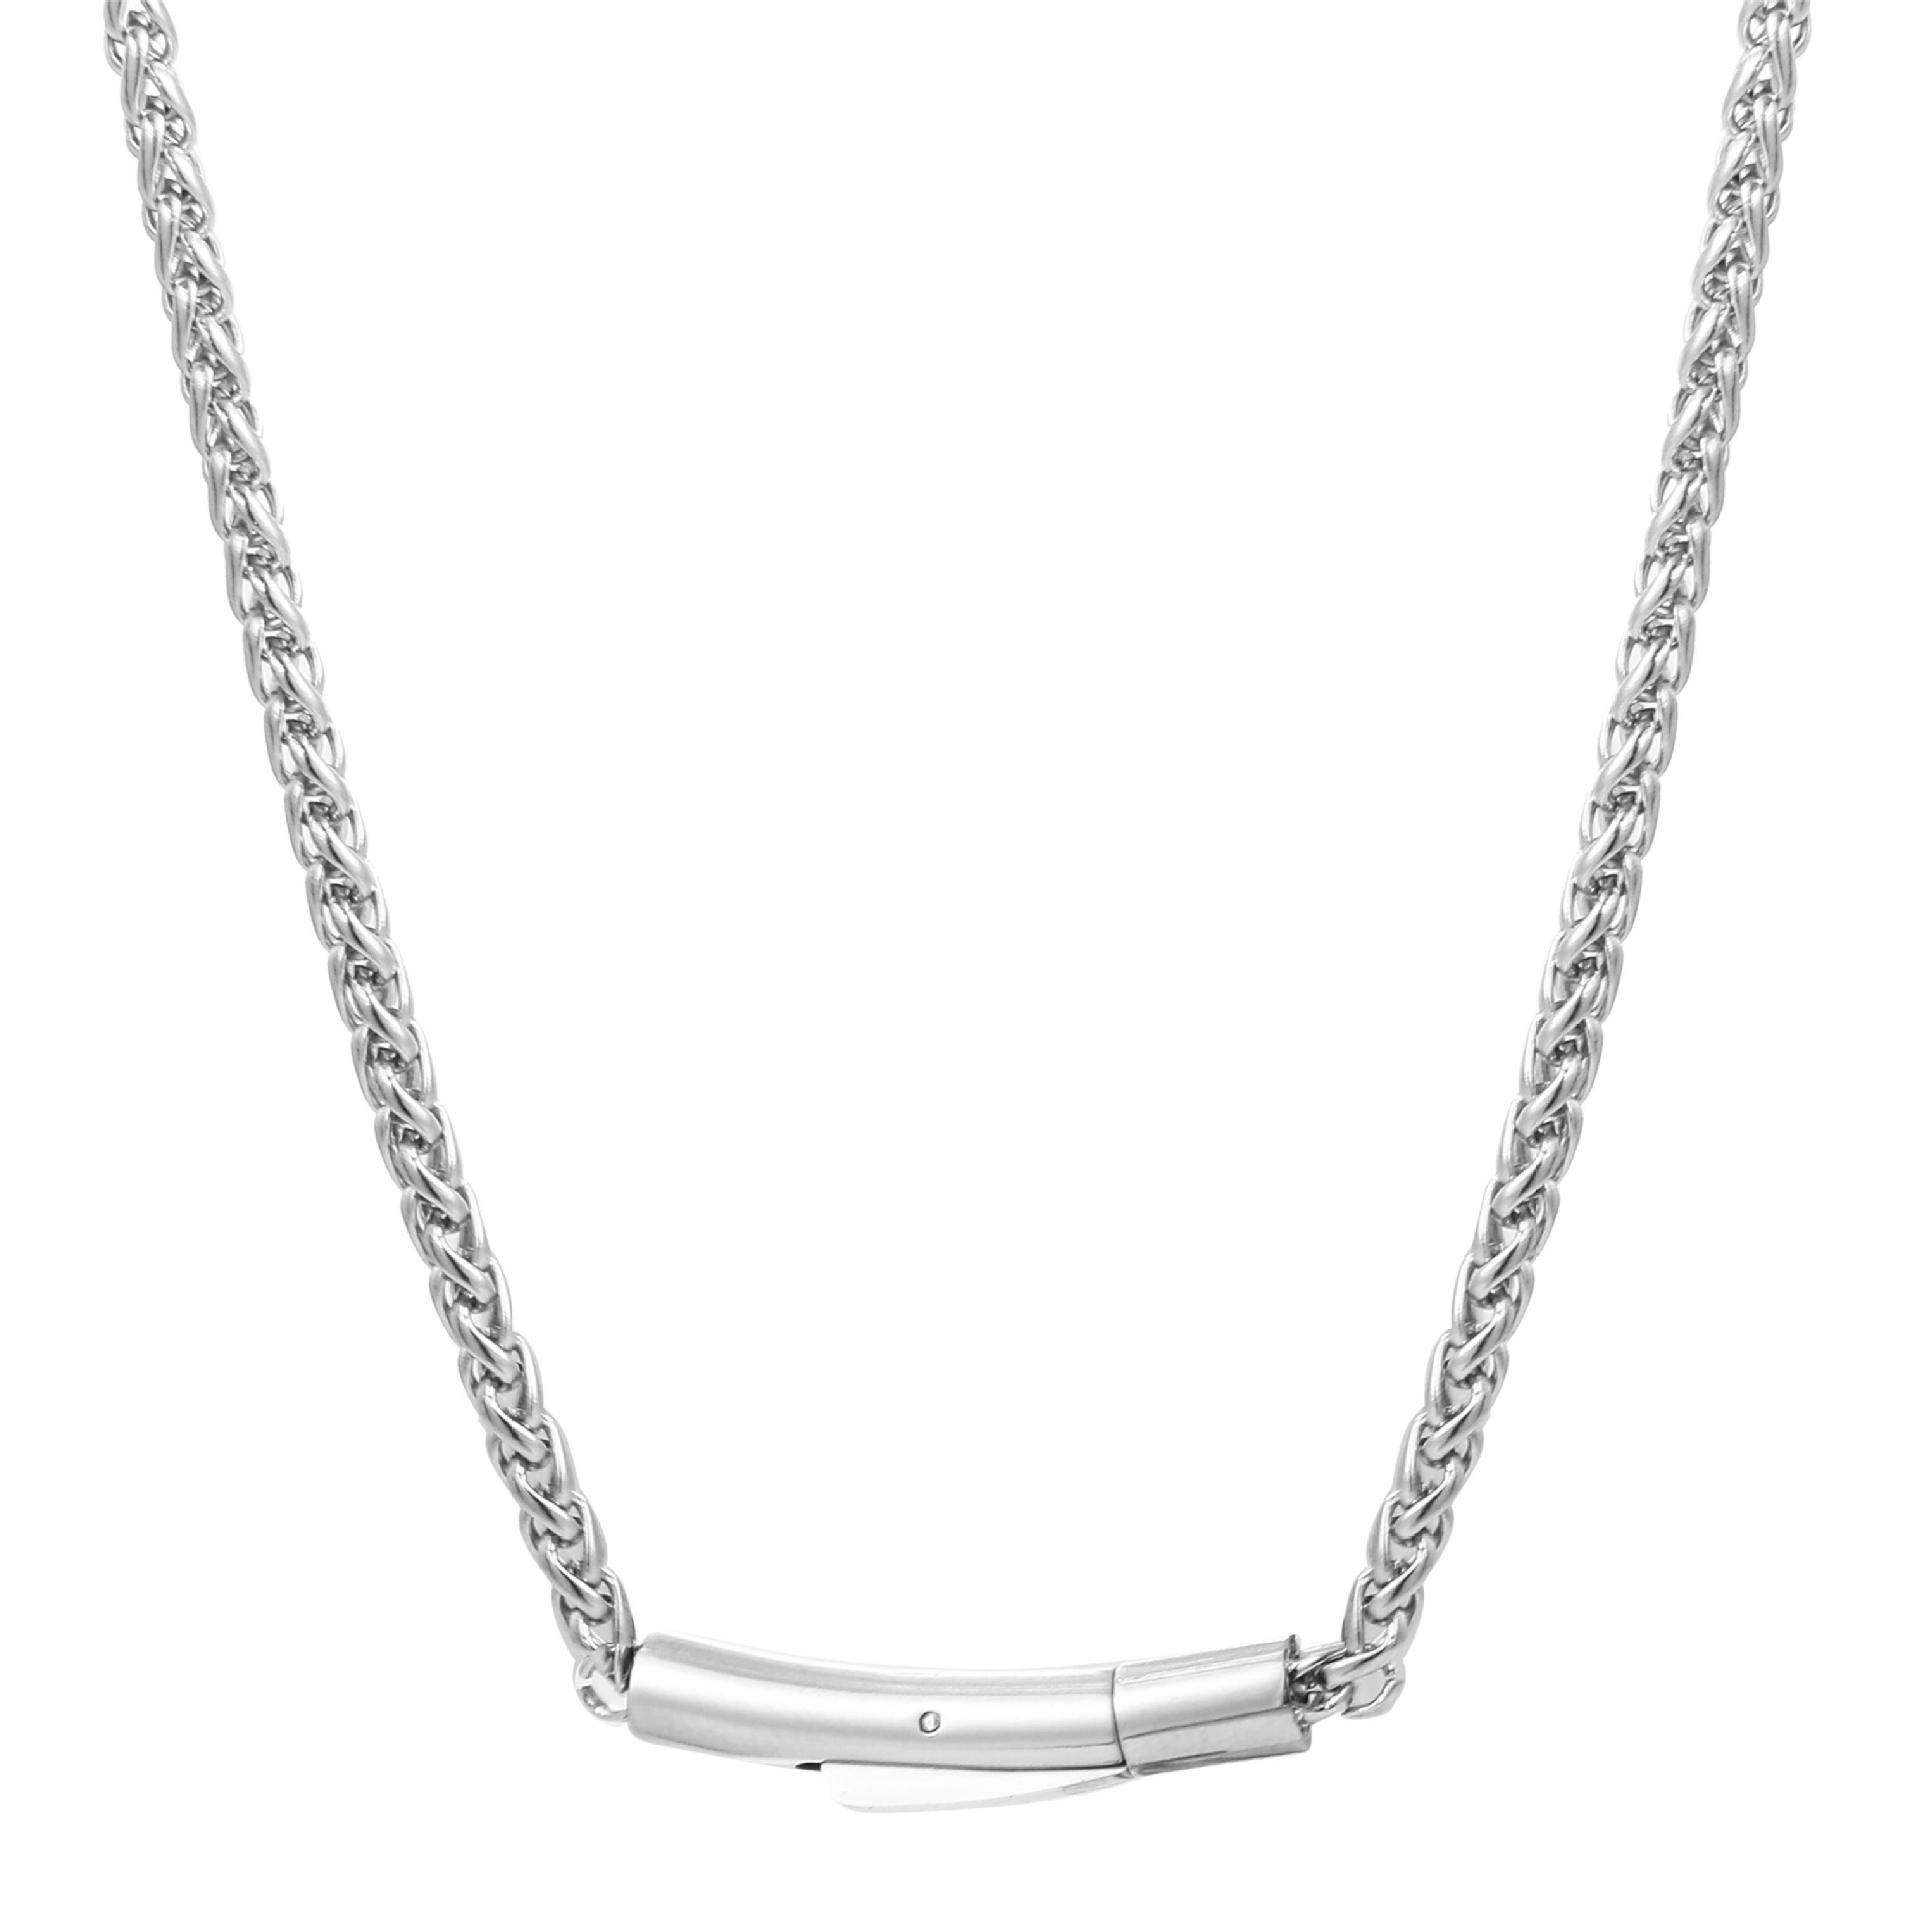 3MM wide steel necklace 60CM